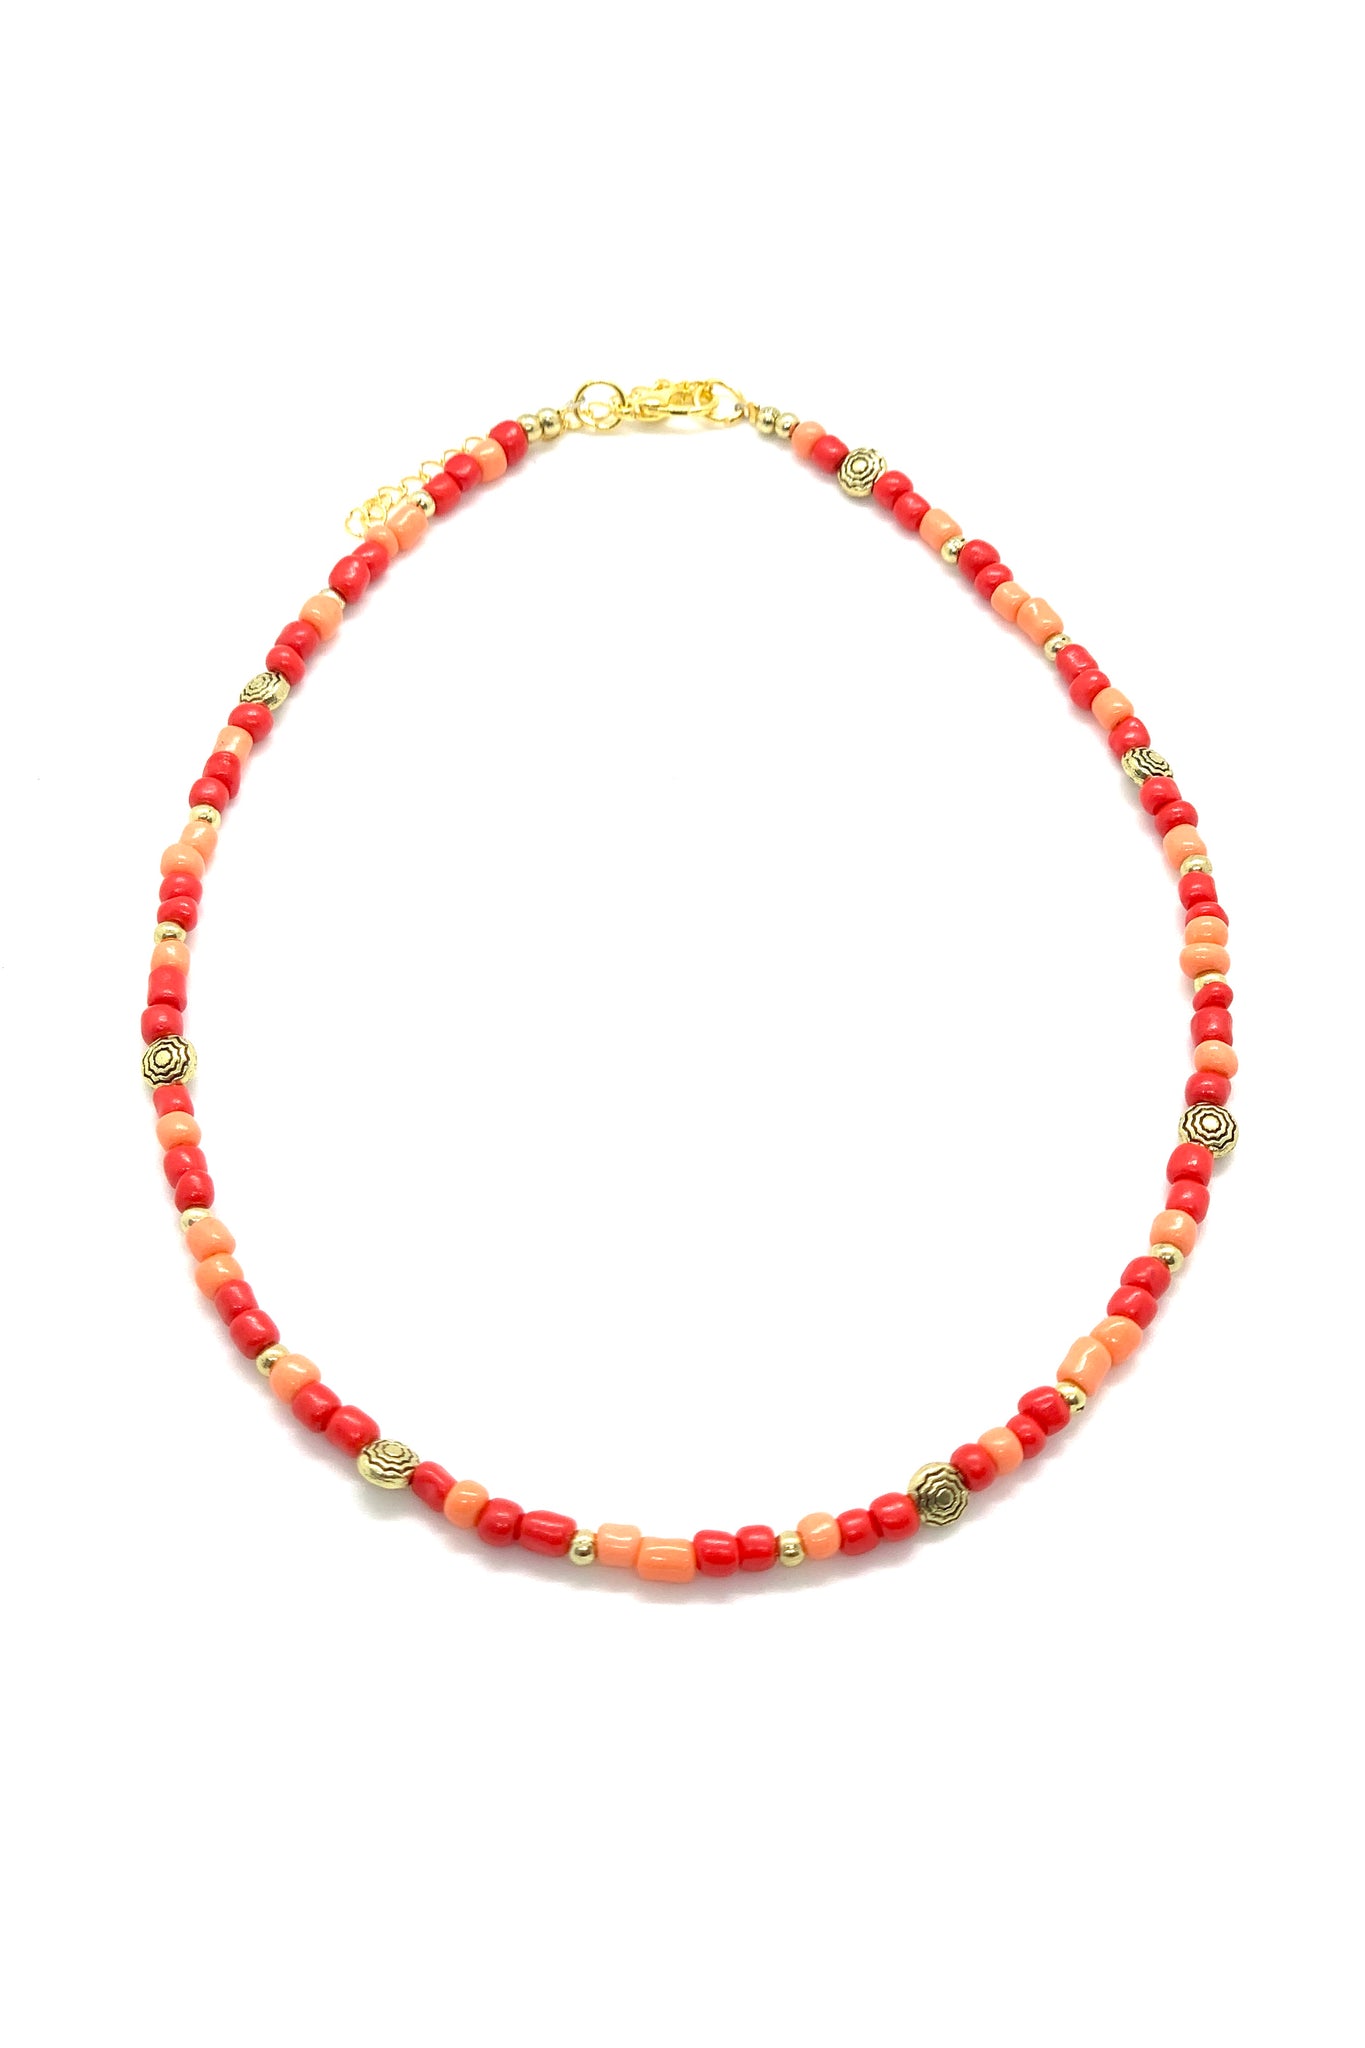 Short necklace in Coral/Orange